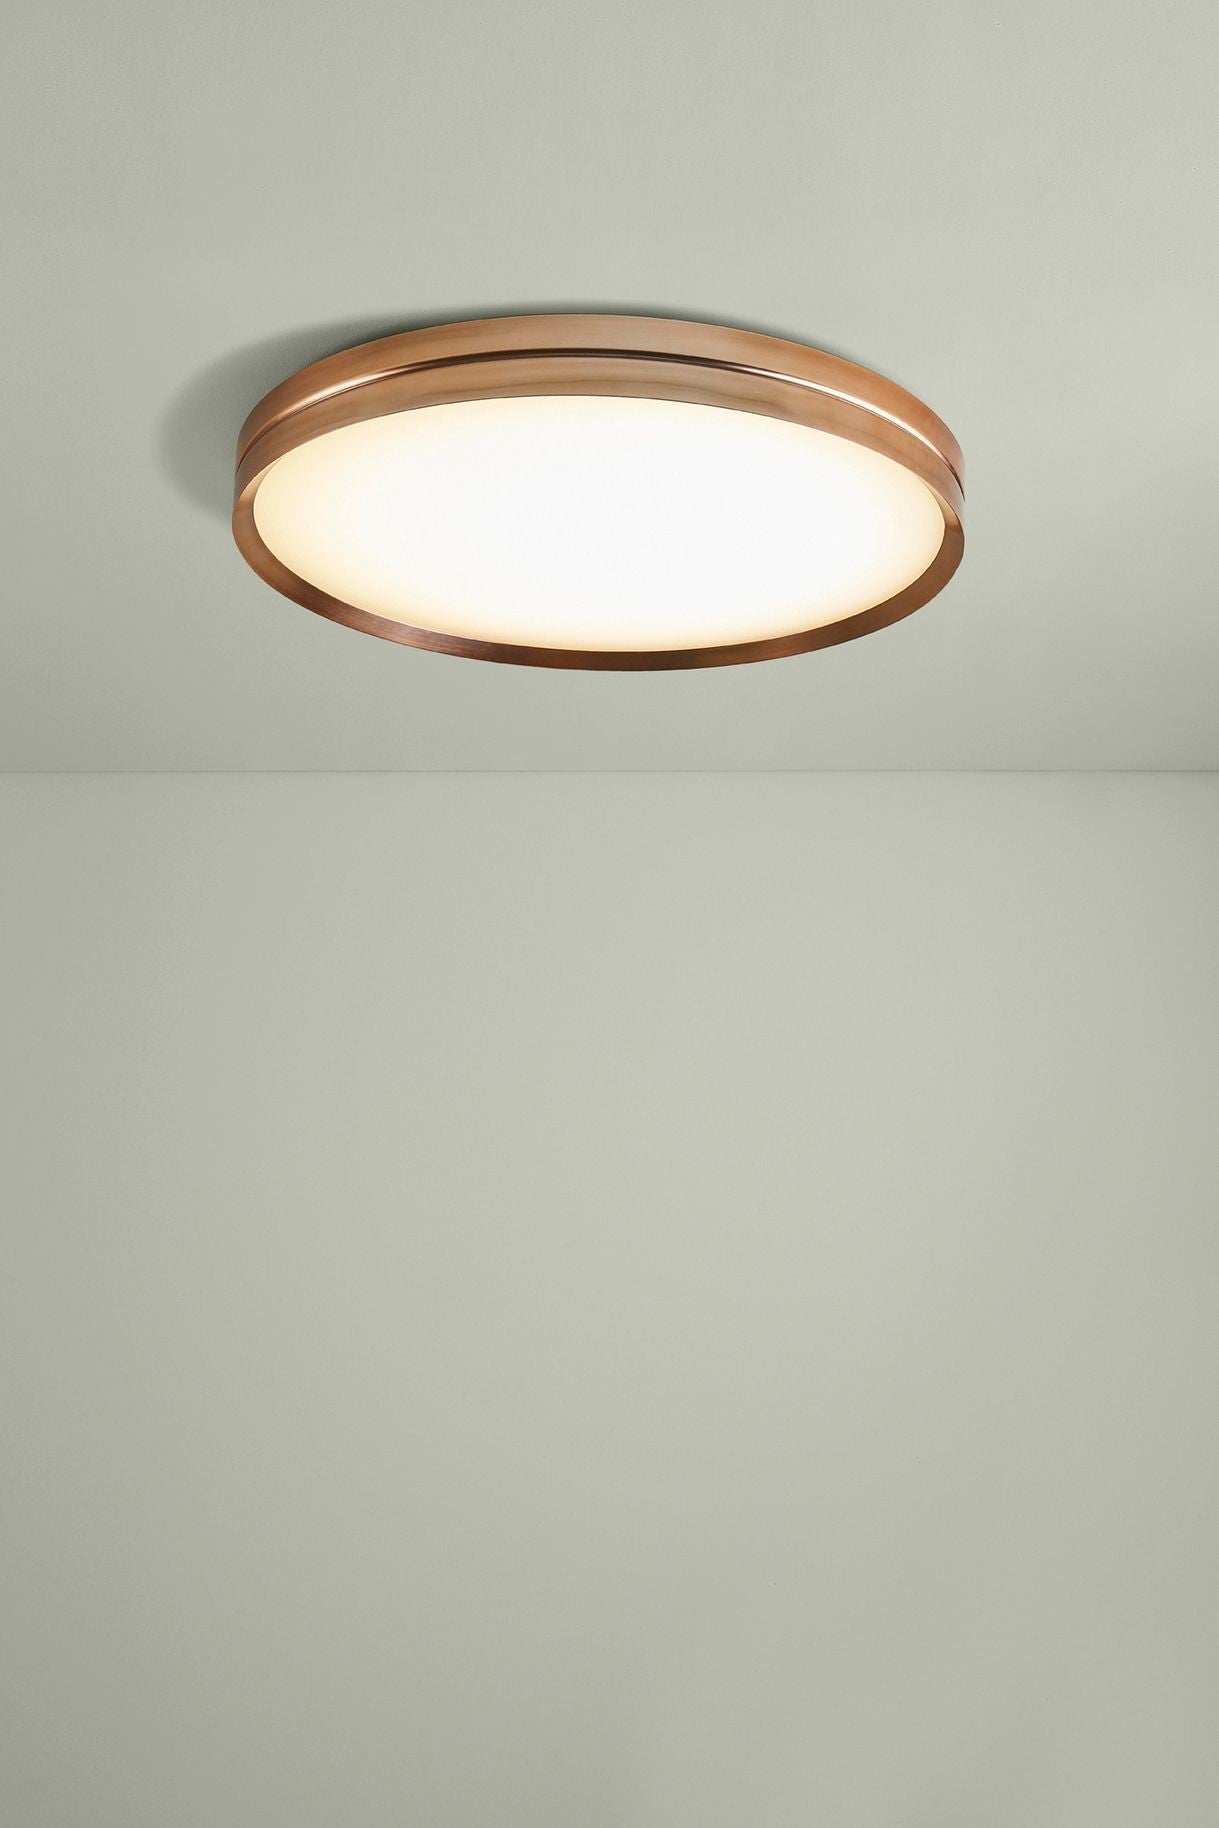 LITE HOLE - Ceiling / Wall Light